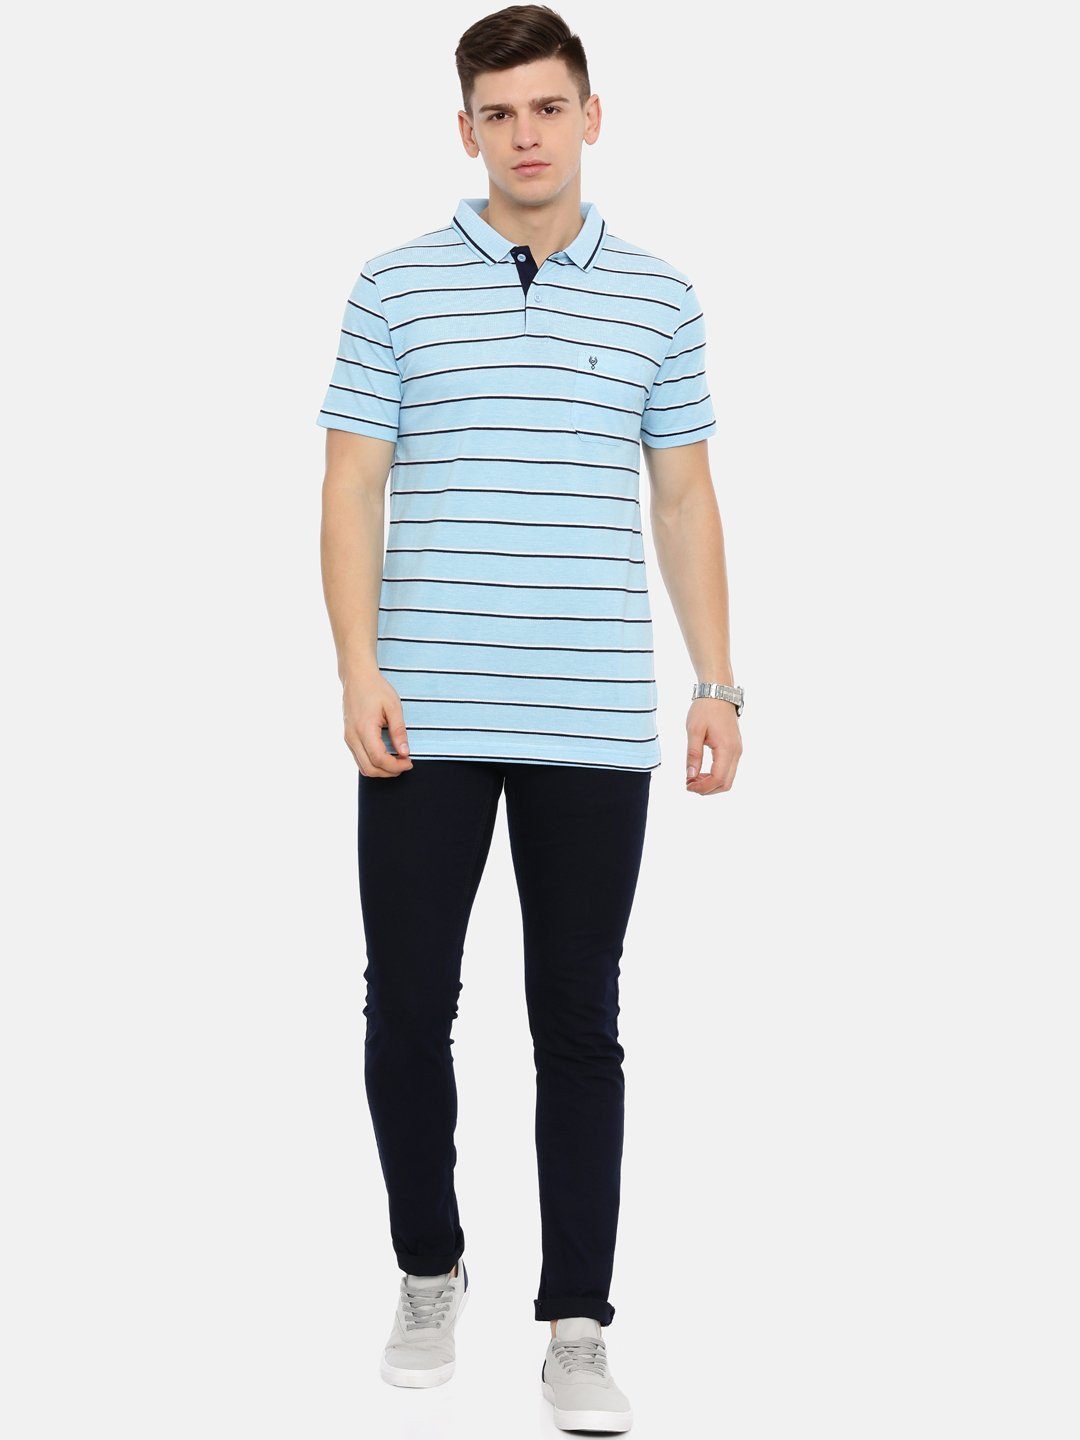 Men's Sky blue with multi-color auto stripes polo t-shirt T-shirt Classic Polo 